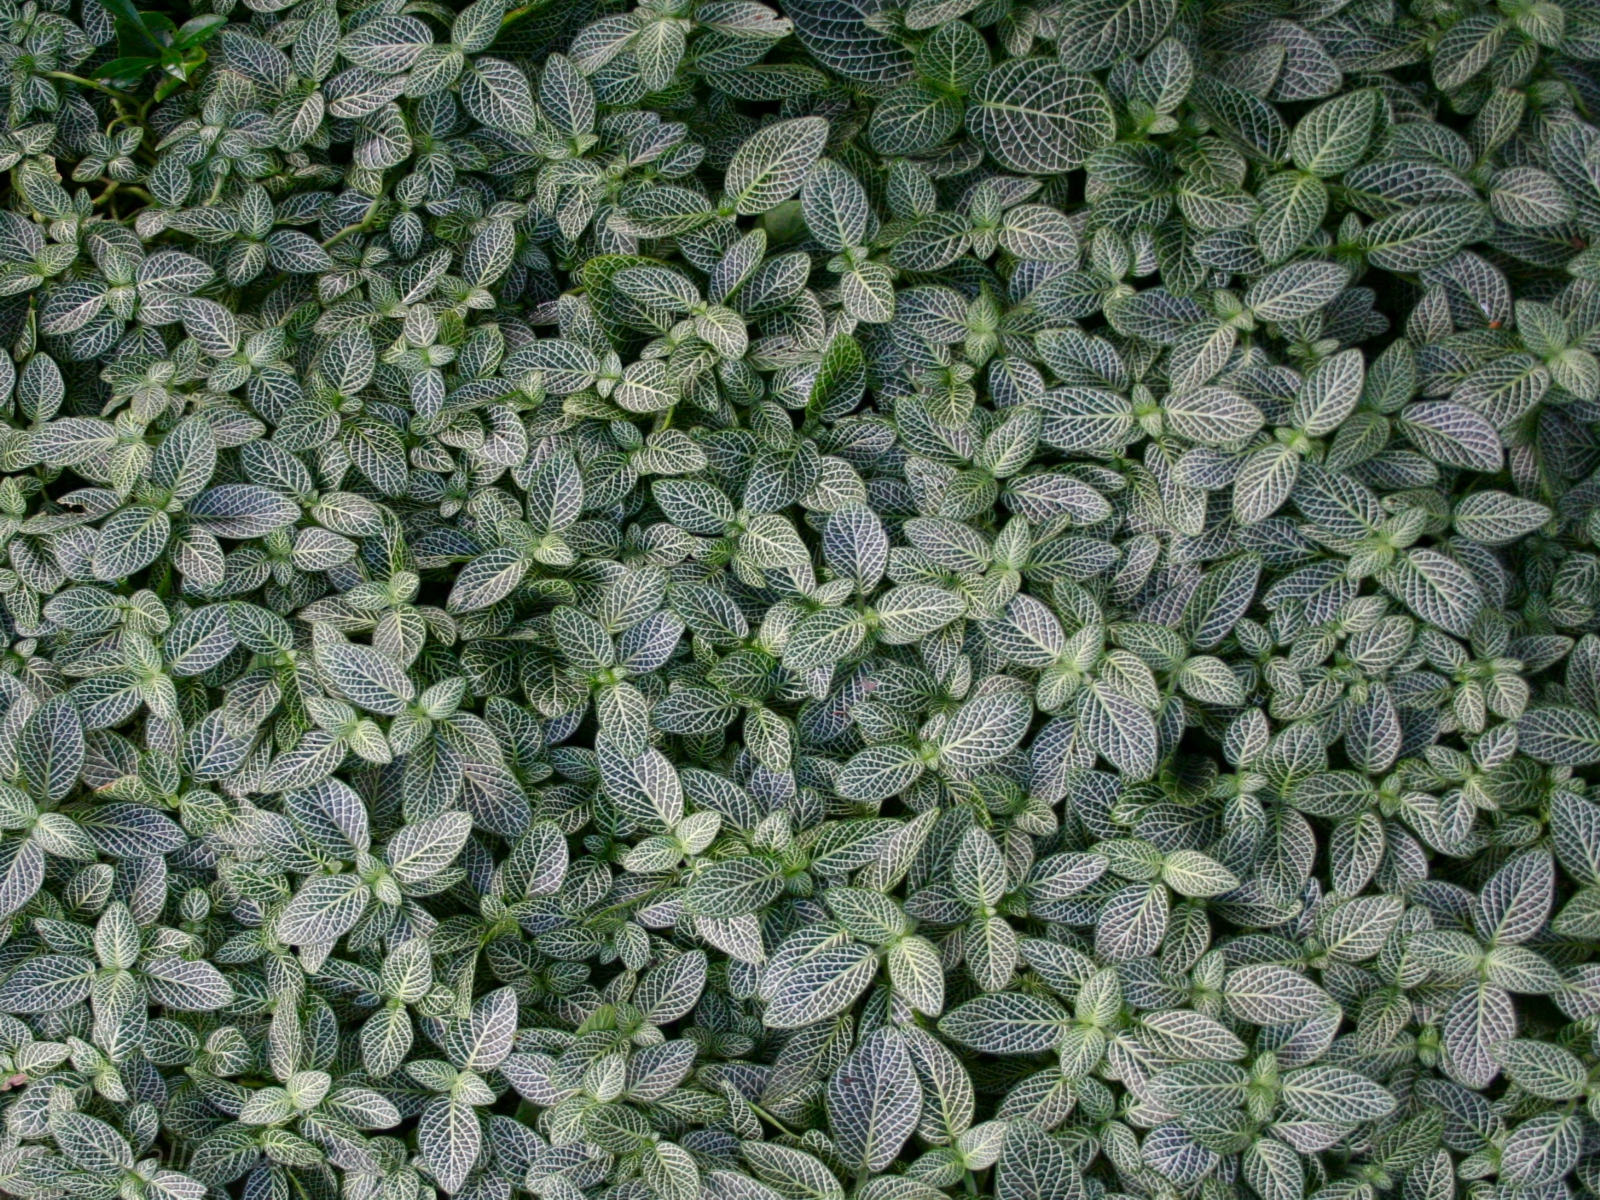 Ground leaf cover - Free desktop wallpapers